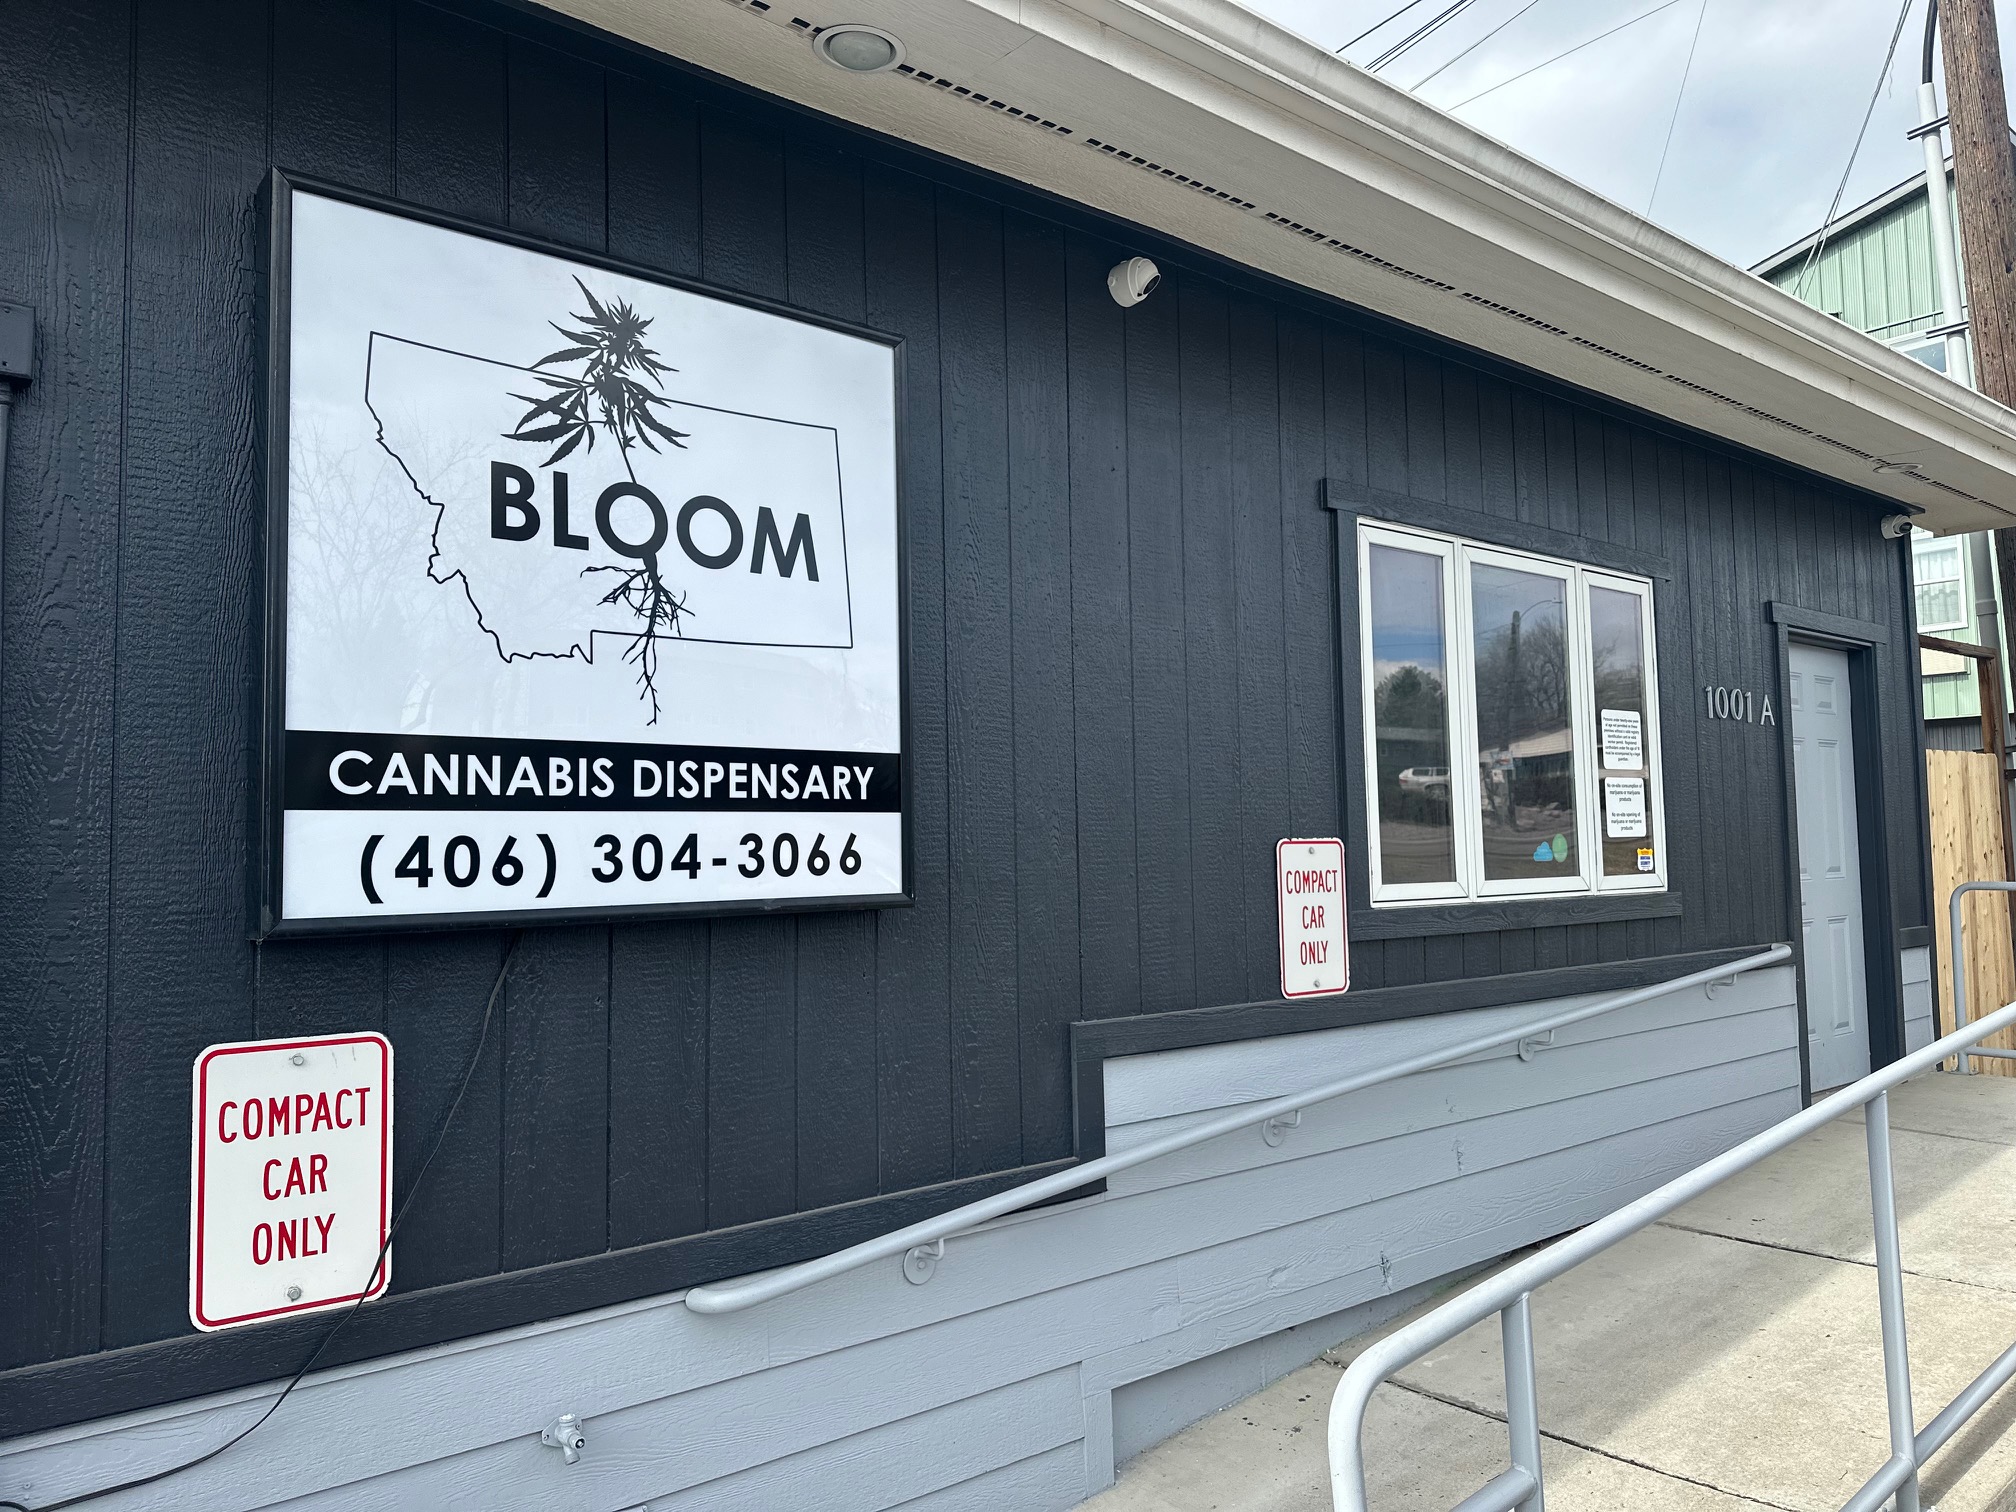 Bloom Montana Deals and Customer Discounts